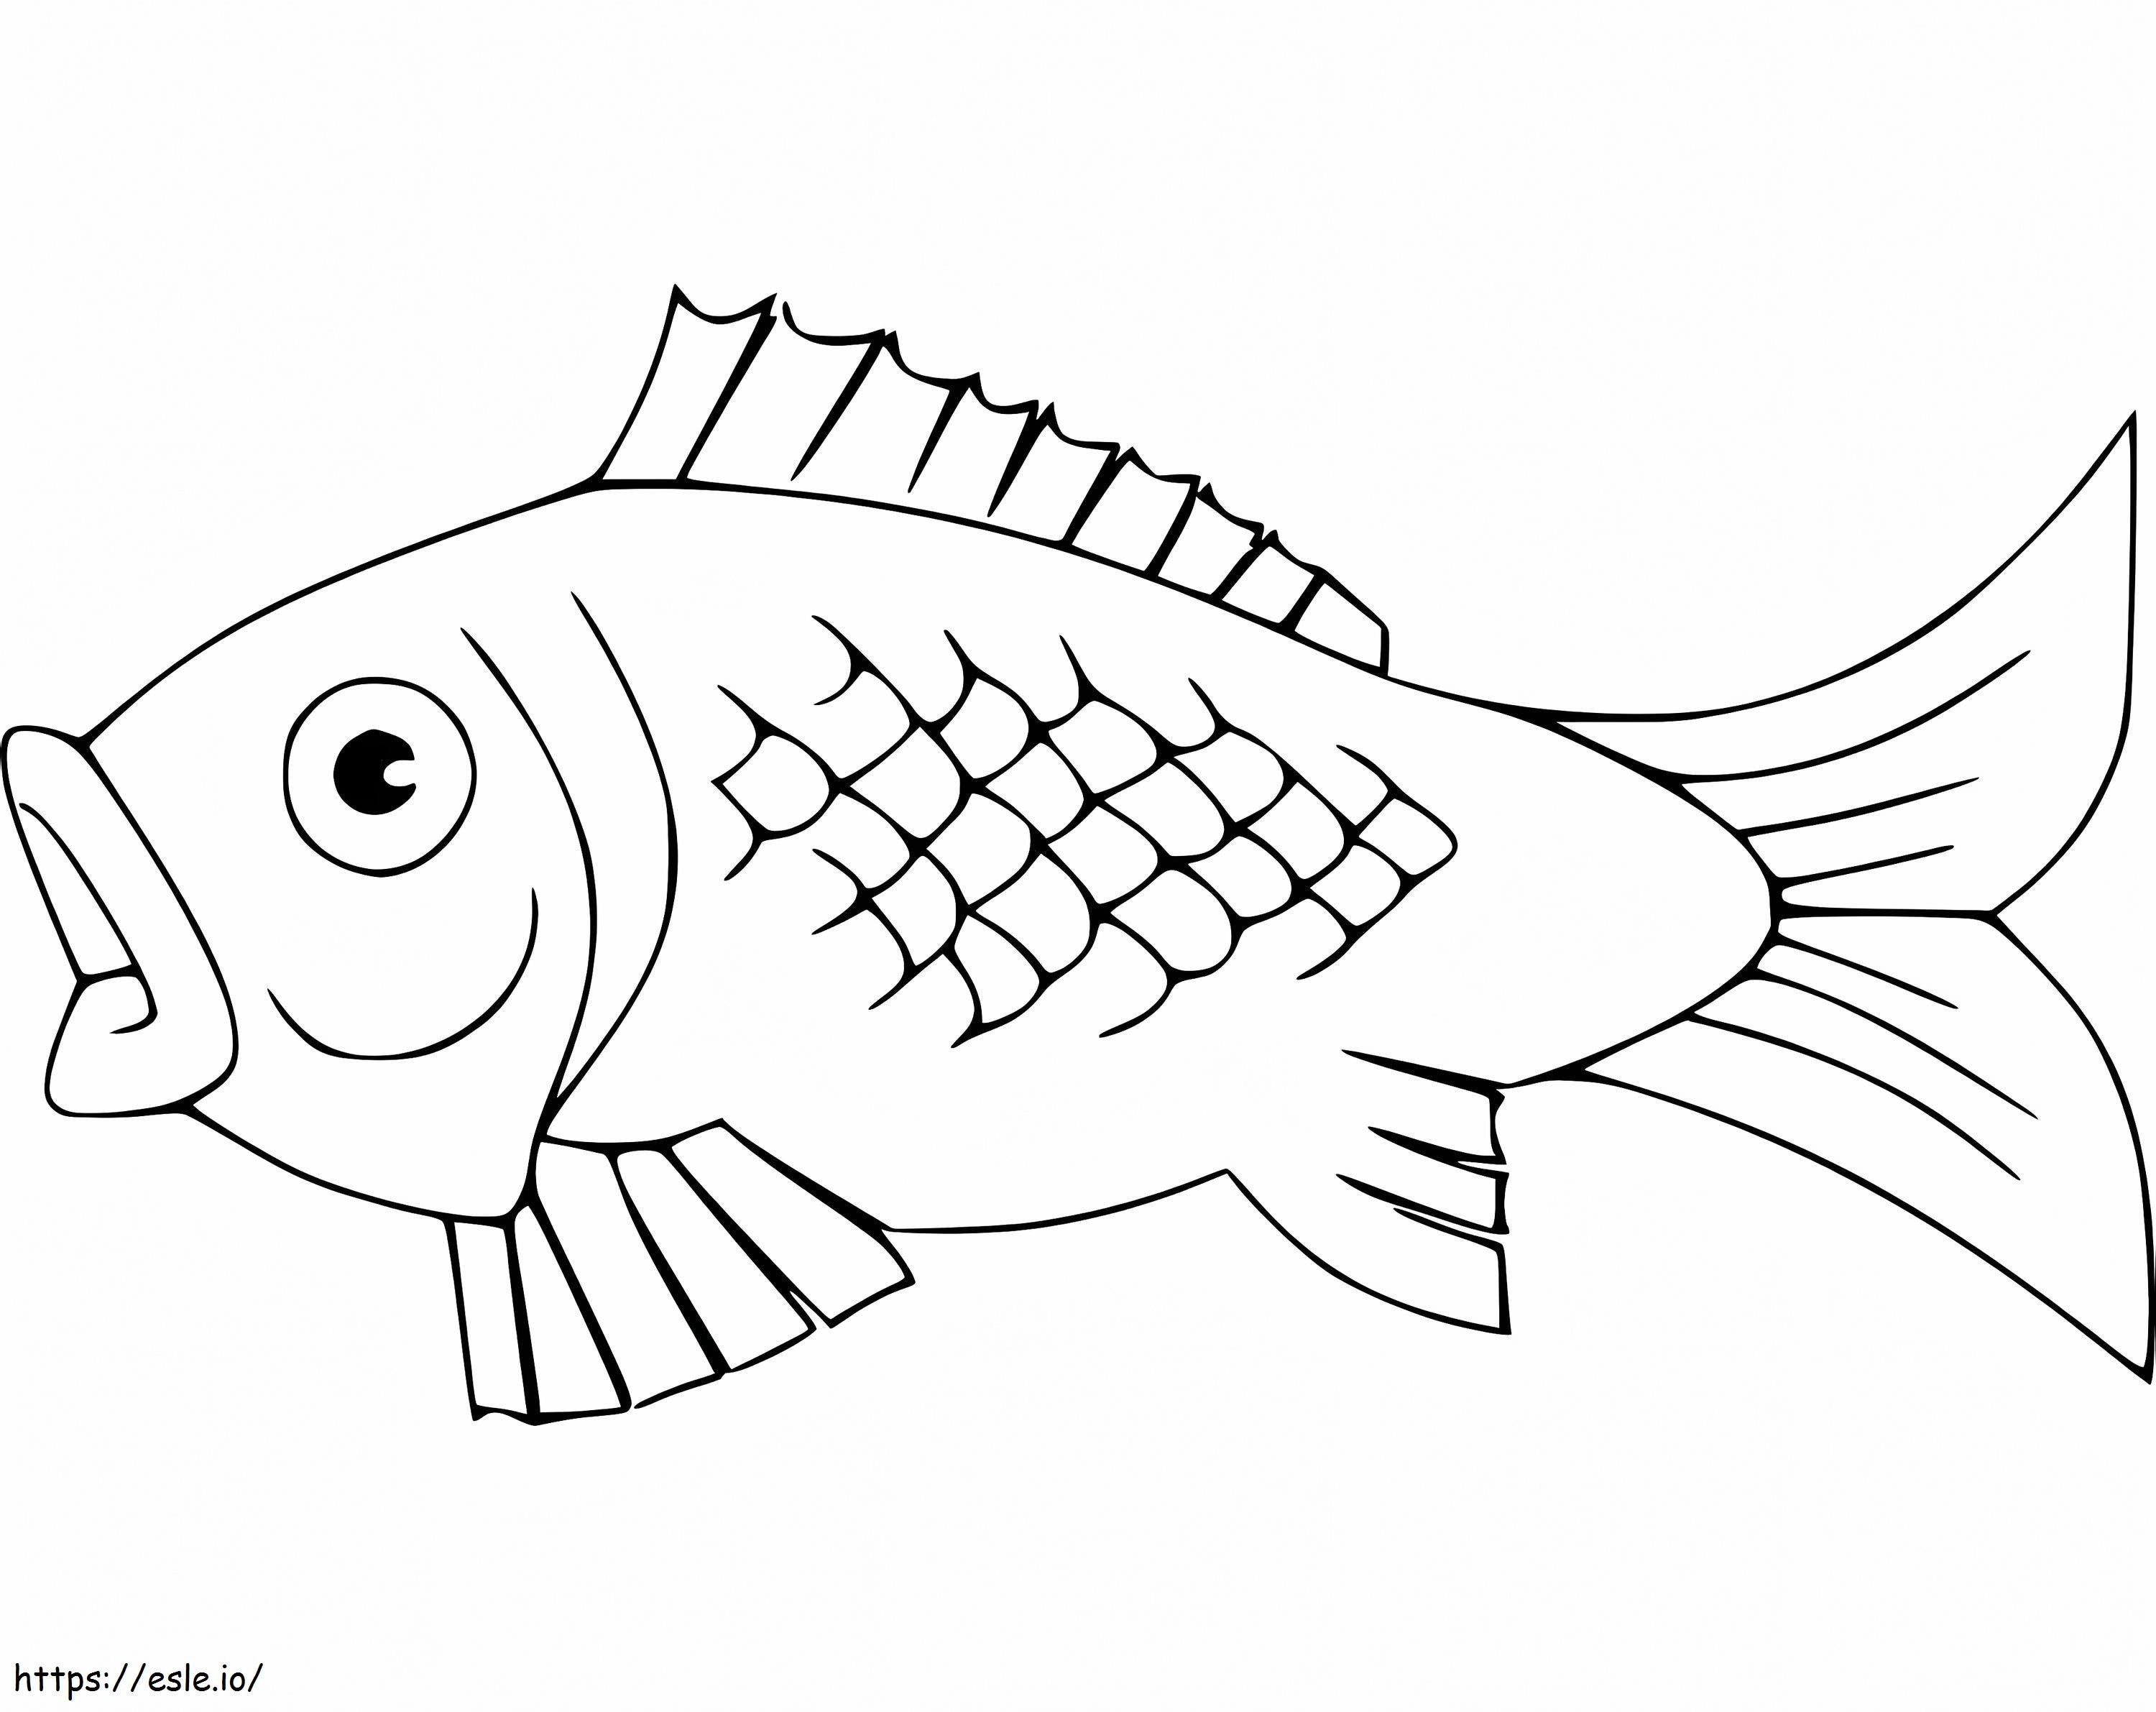 A Carp Fish coloring page